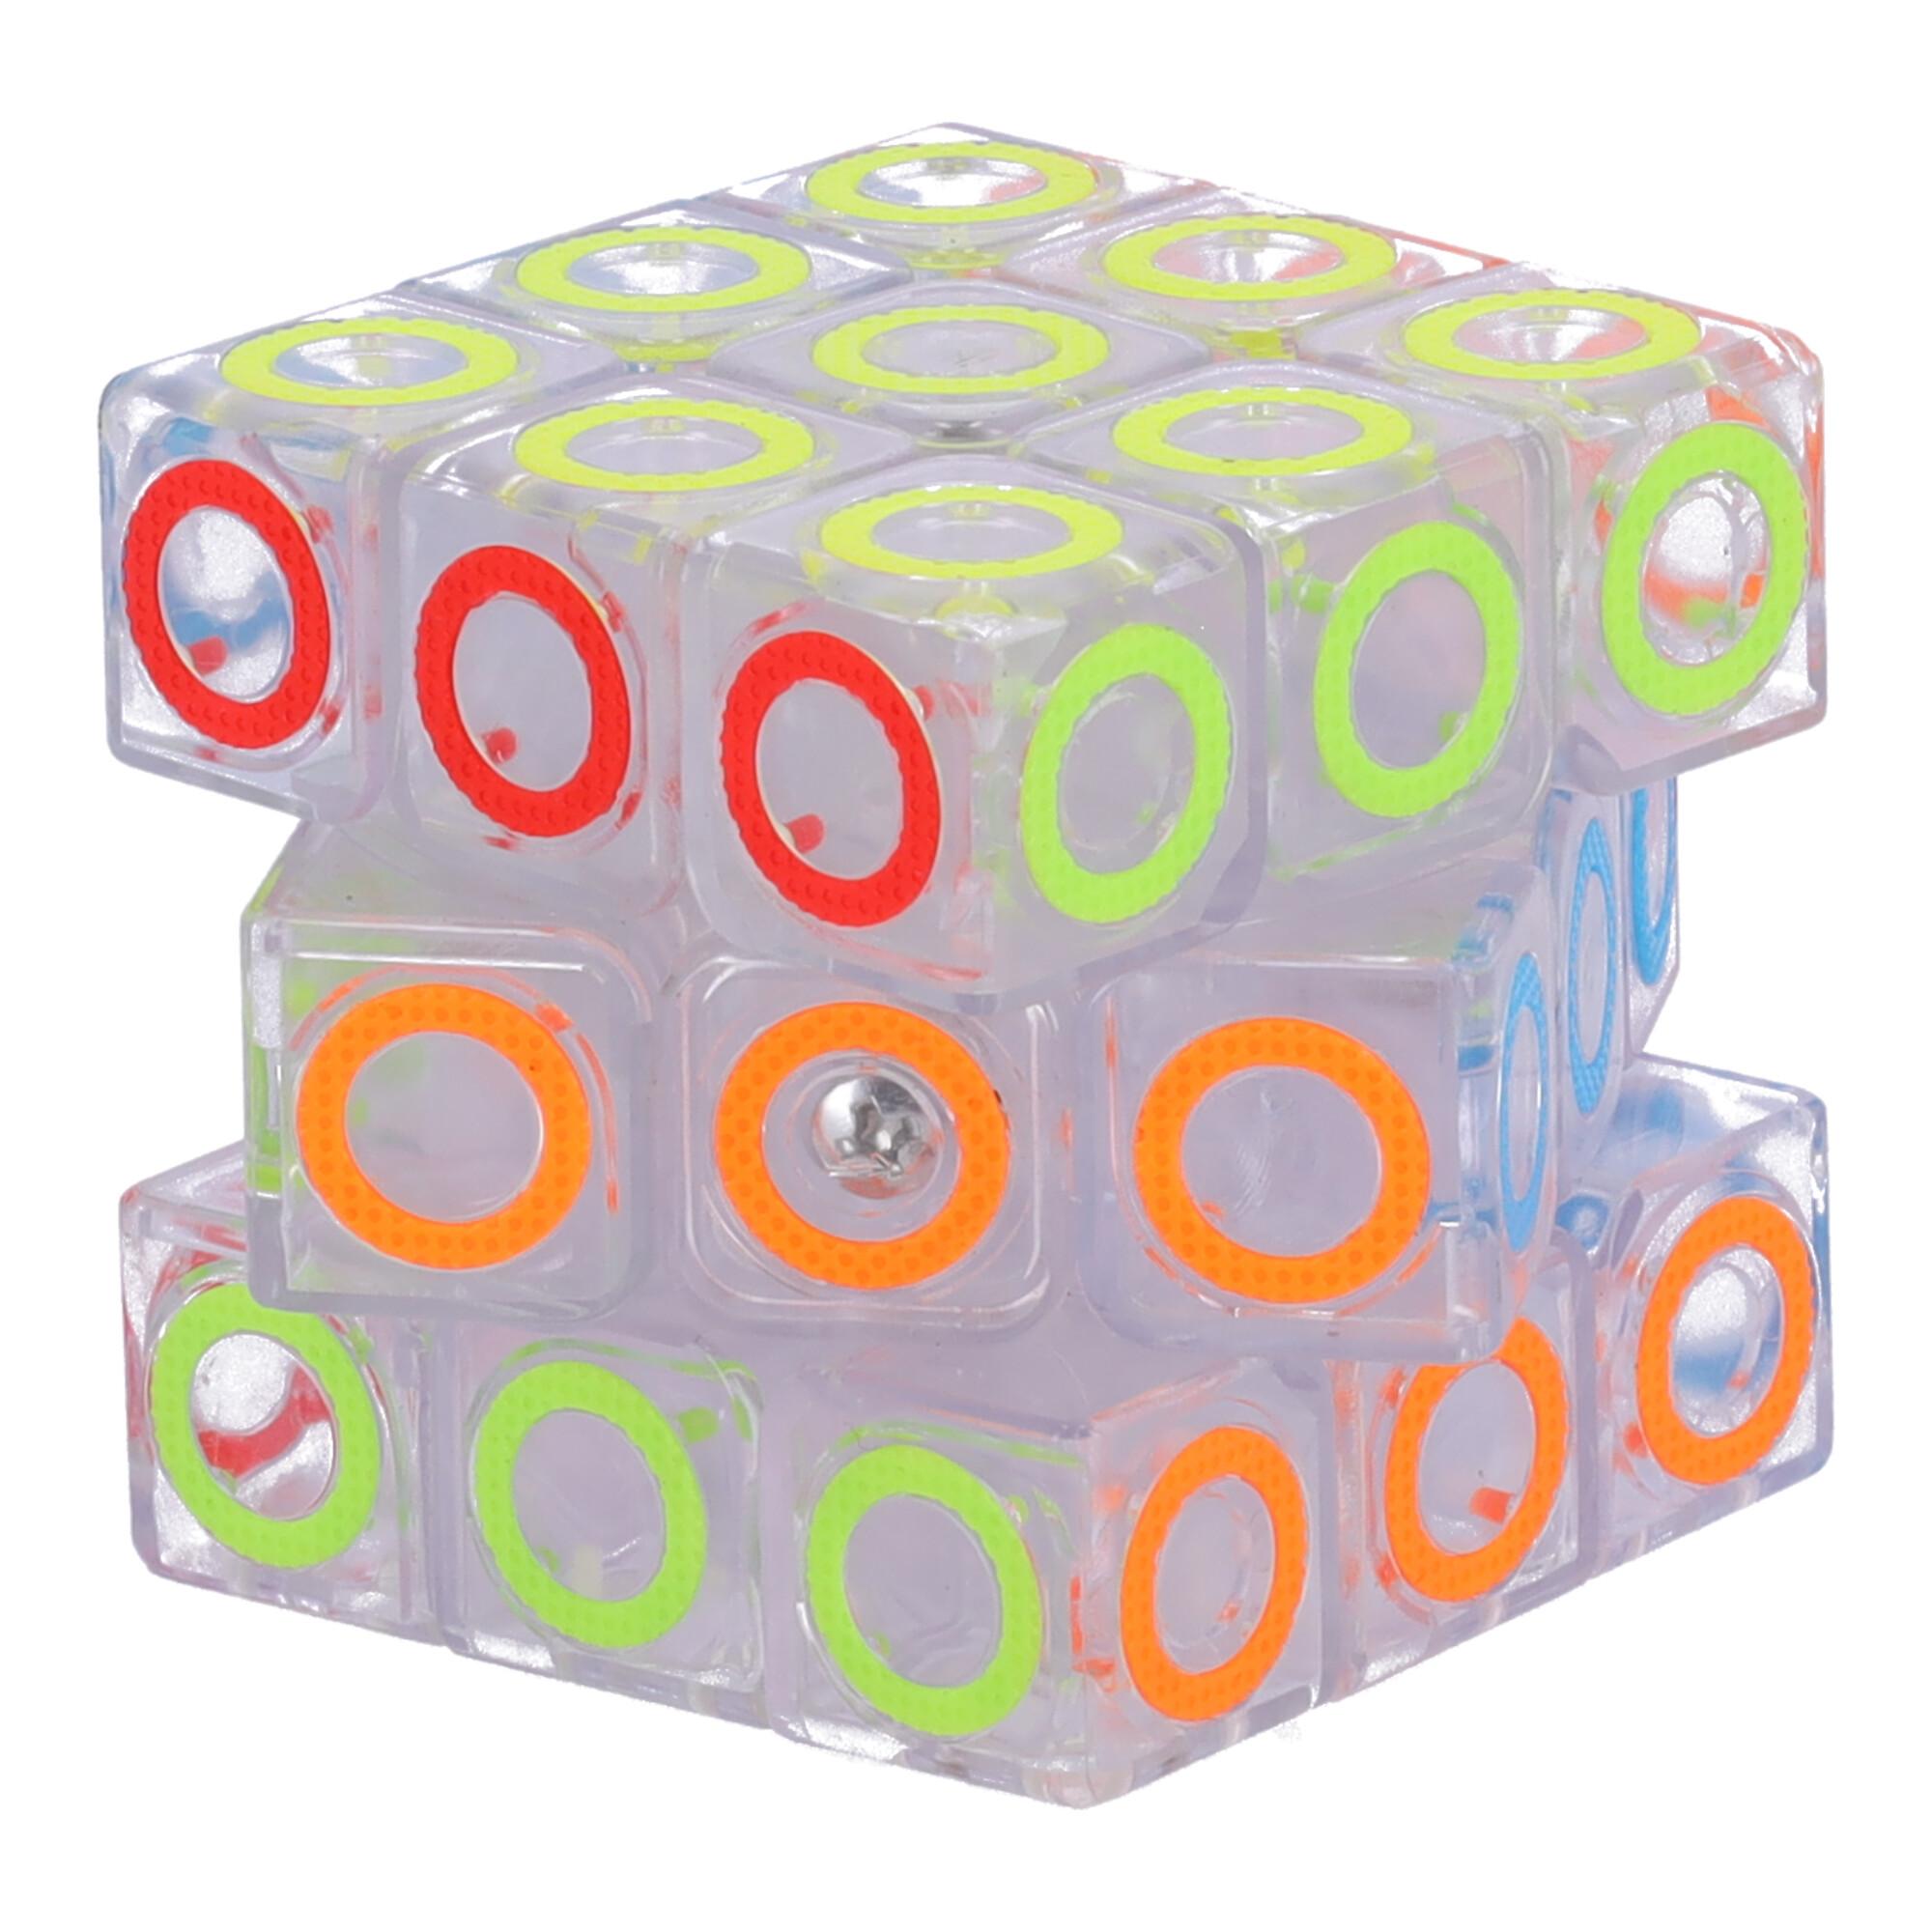 Modern jigsaw puzzle, Rubik's Cube - type IV